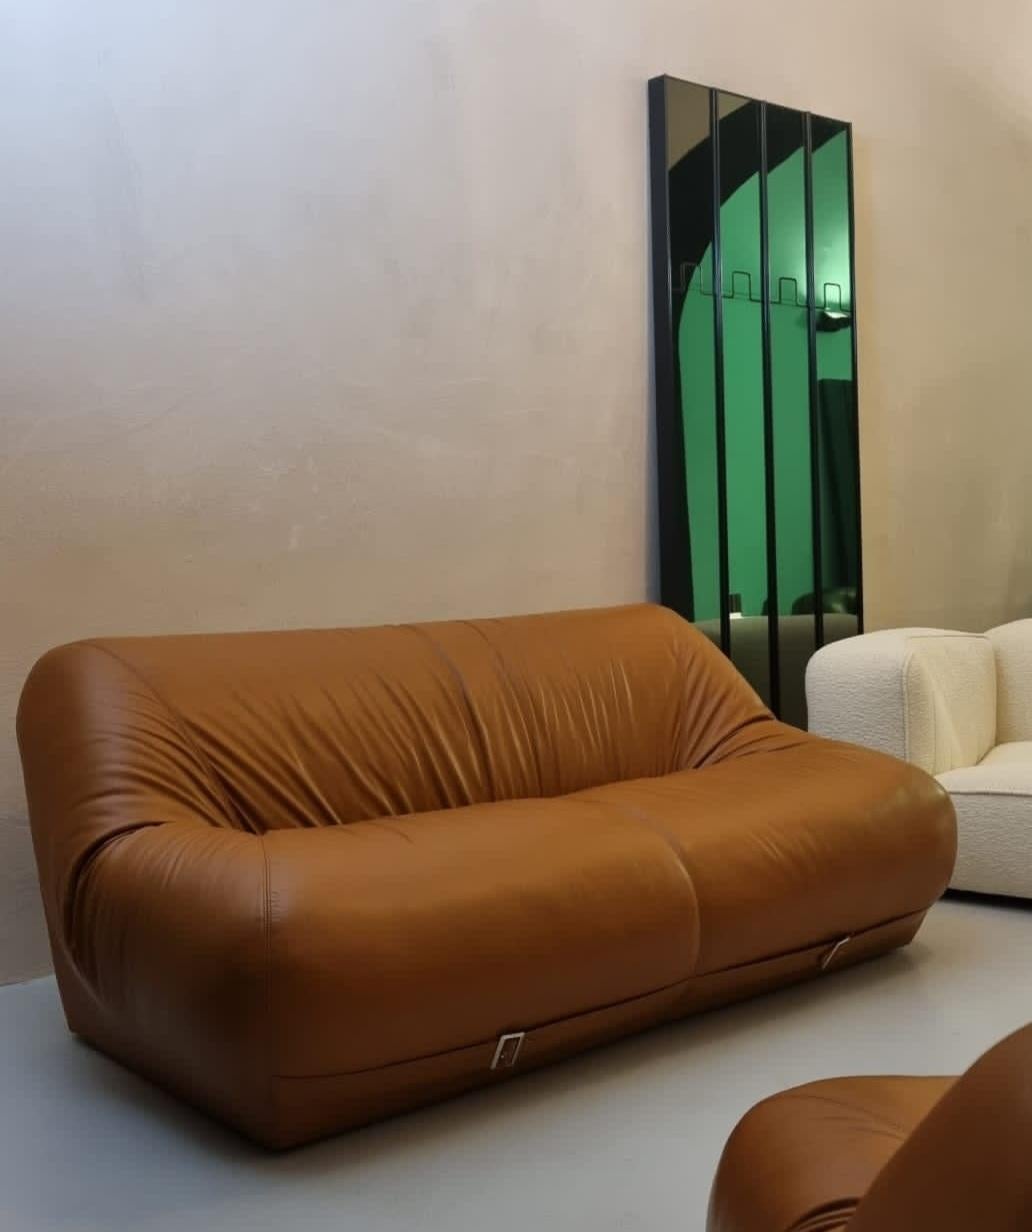 Mid-Century Modern Living Room Sets 70s, Italian Production